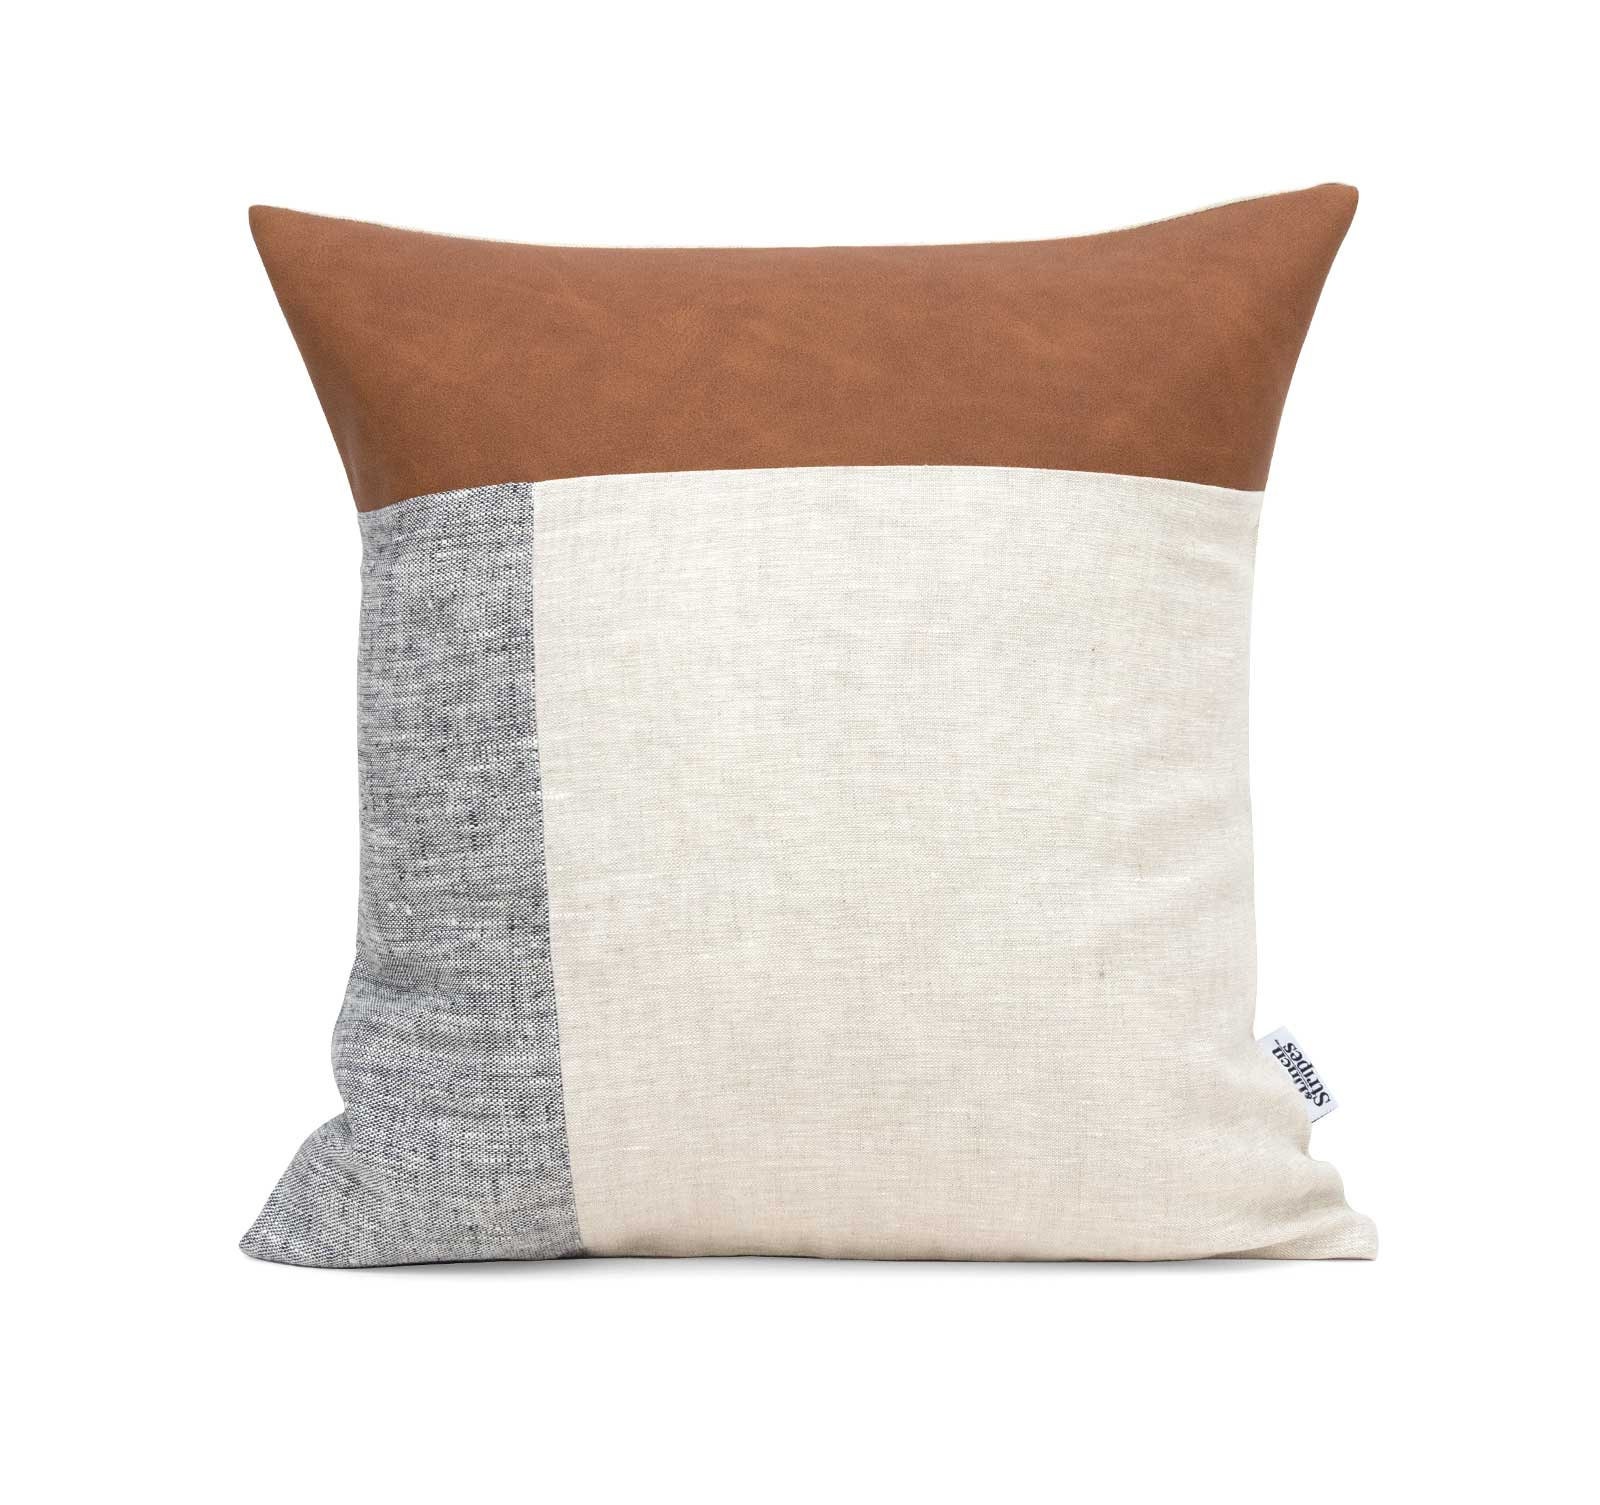 Throw Pillow Set 6, 18x18 Vegan leather throw pillow, Modern Minimal